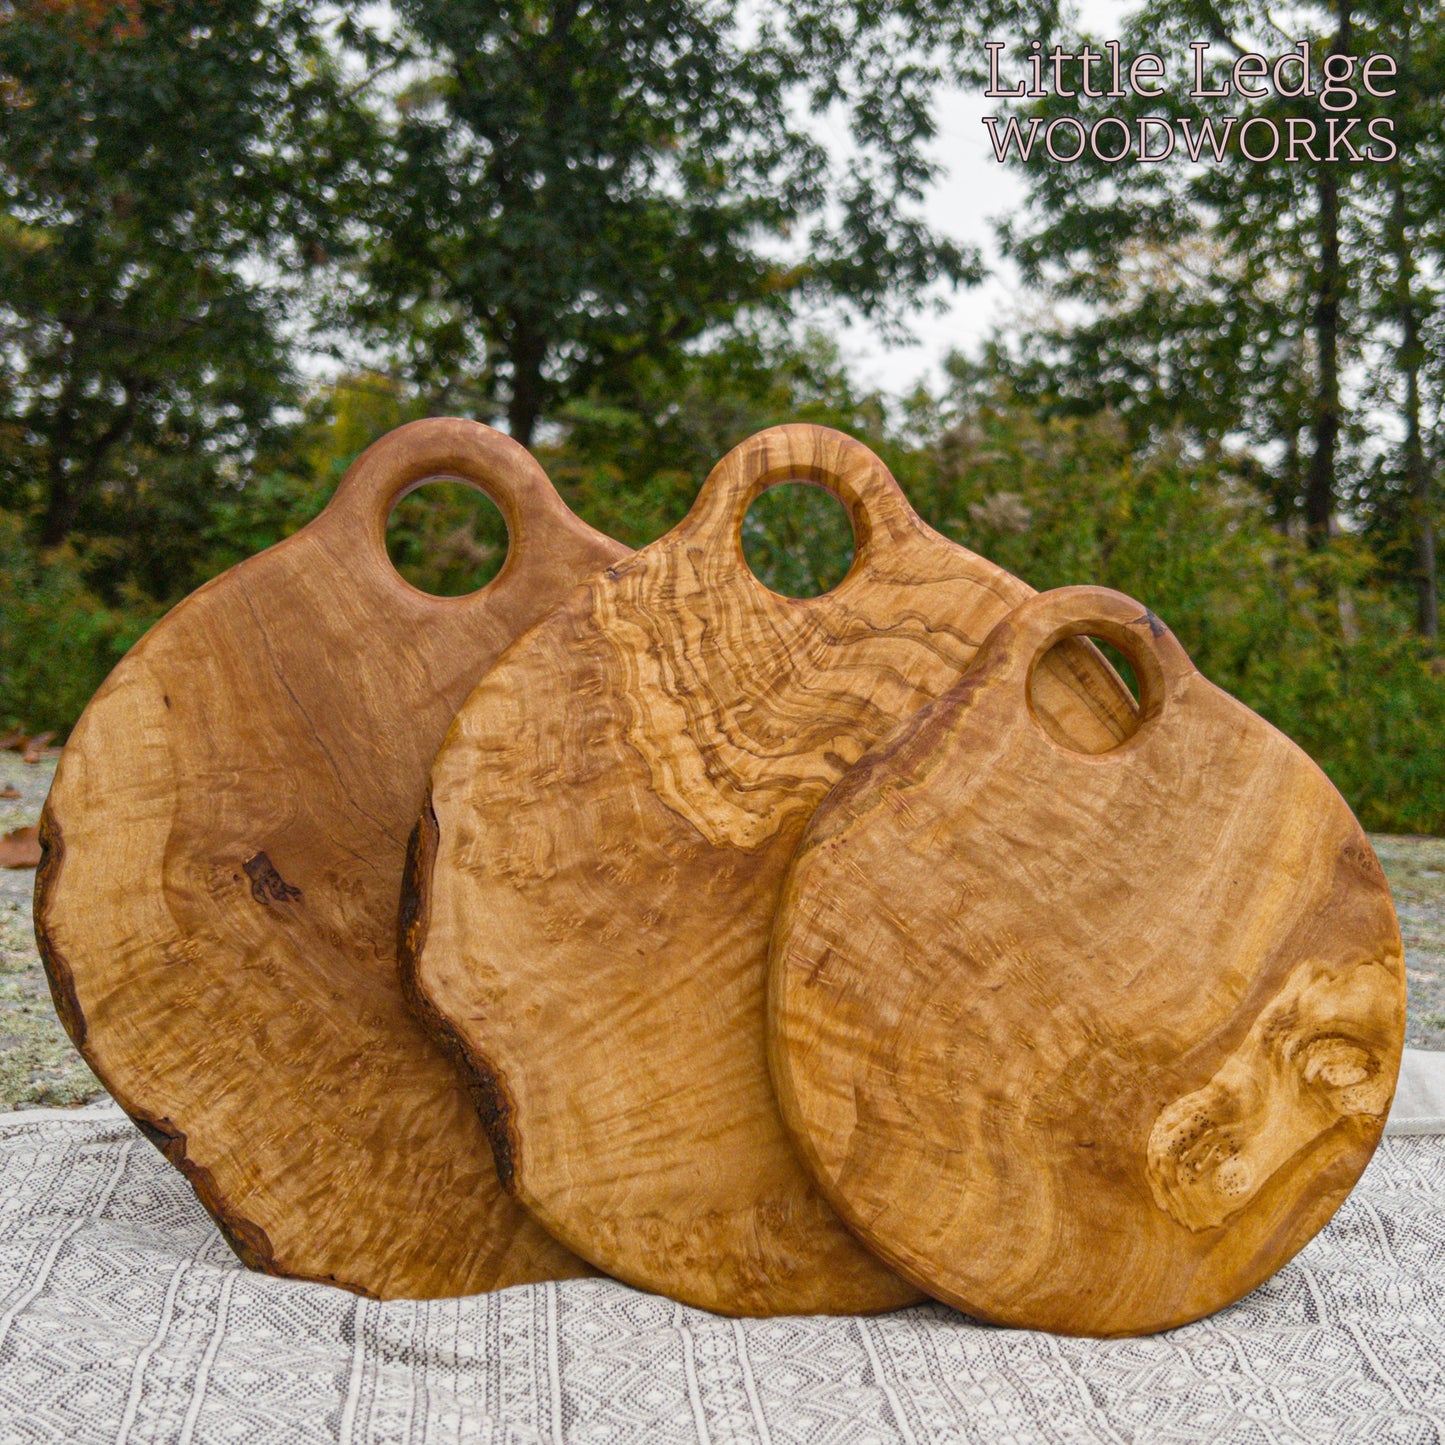 Wattle Wood Cutting Board - With Lanyard - Oval - Rectangle